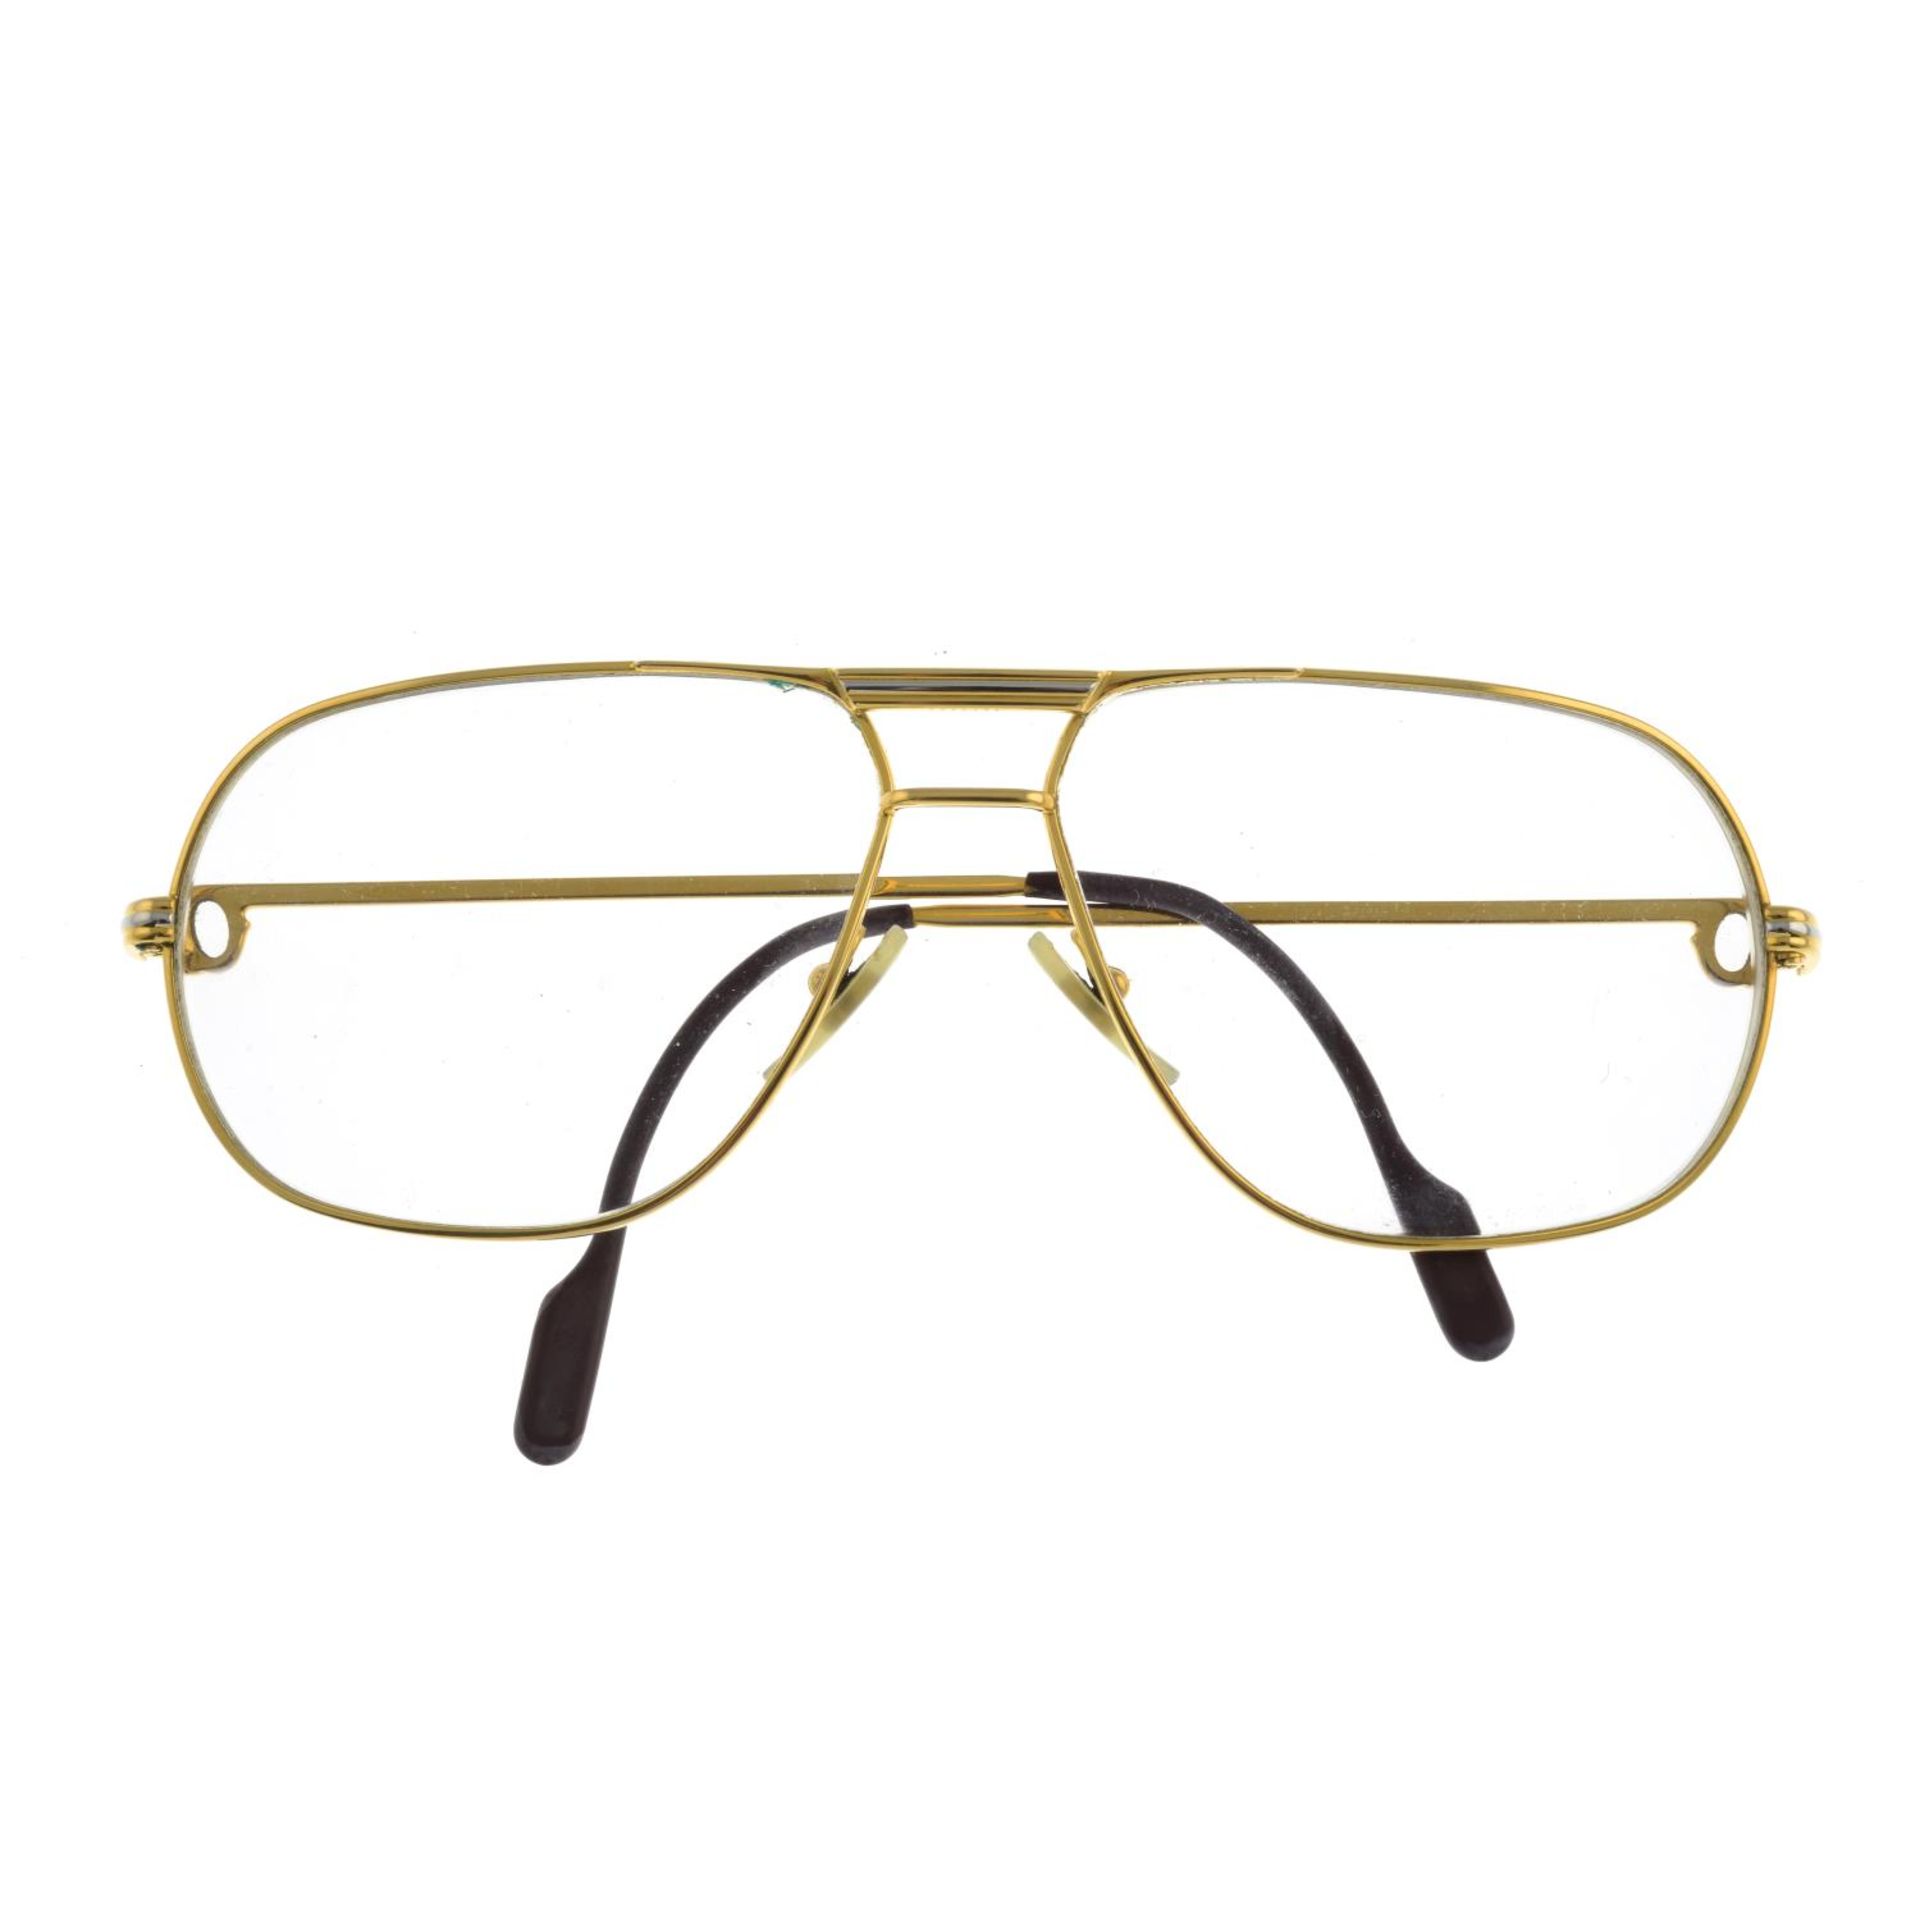 CARTIER - a pair of gold-plated prescription aviator glasses.